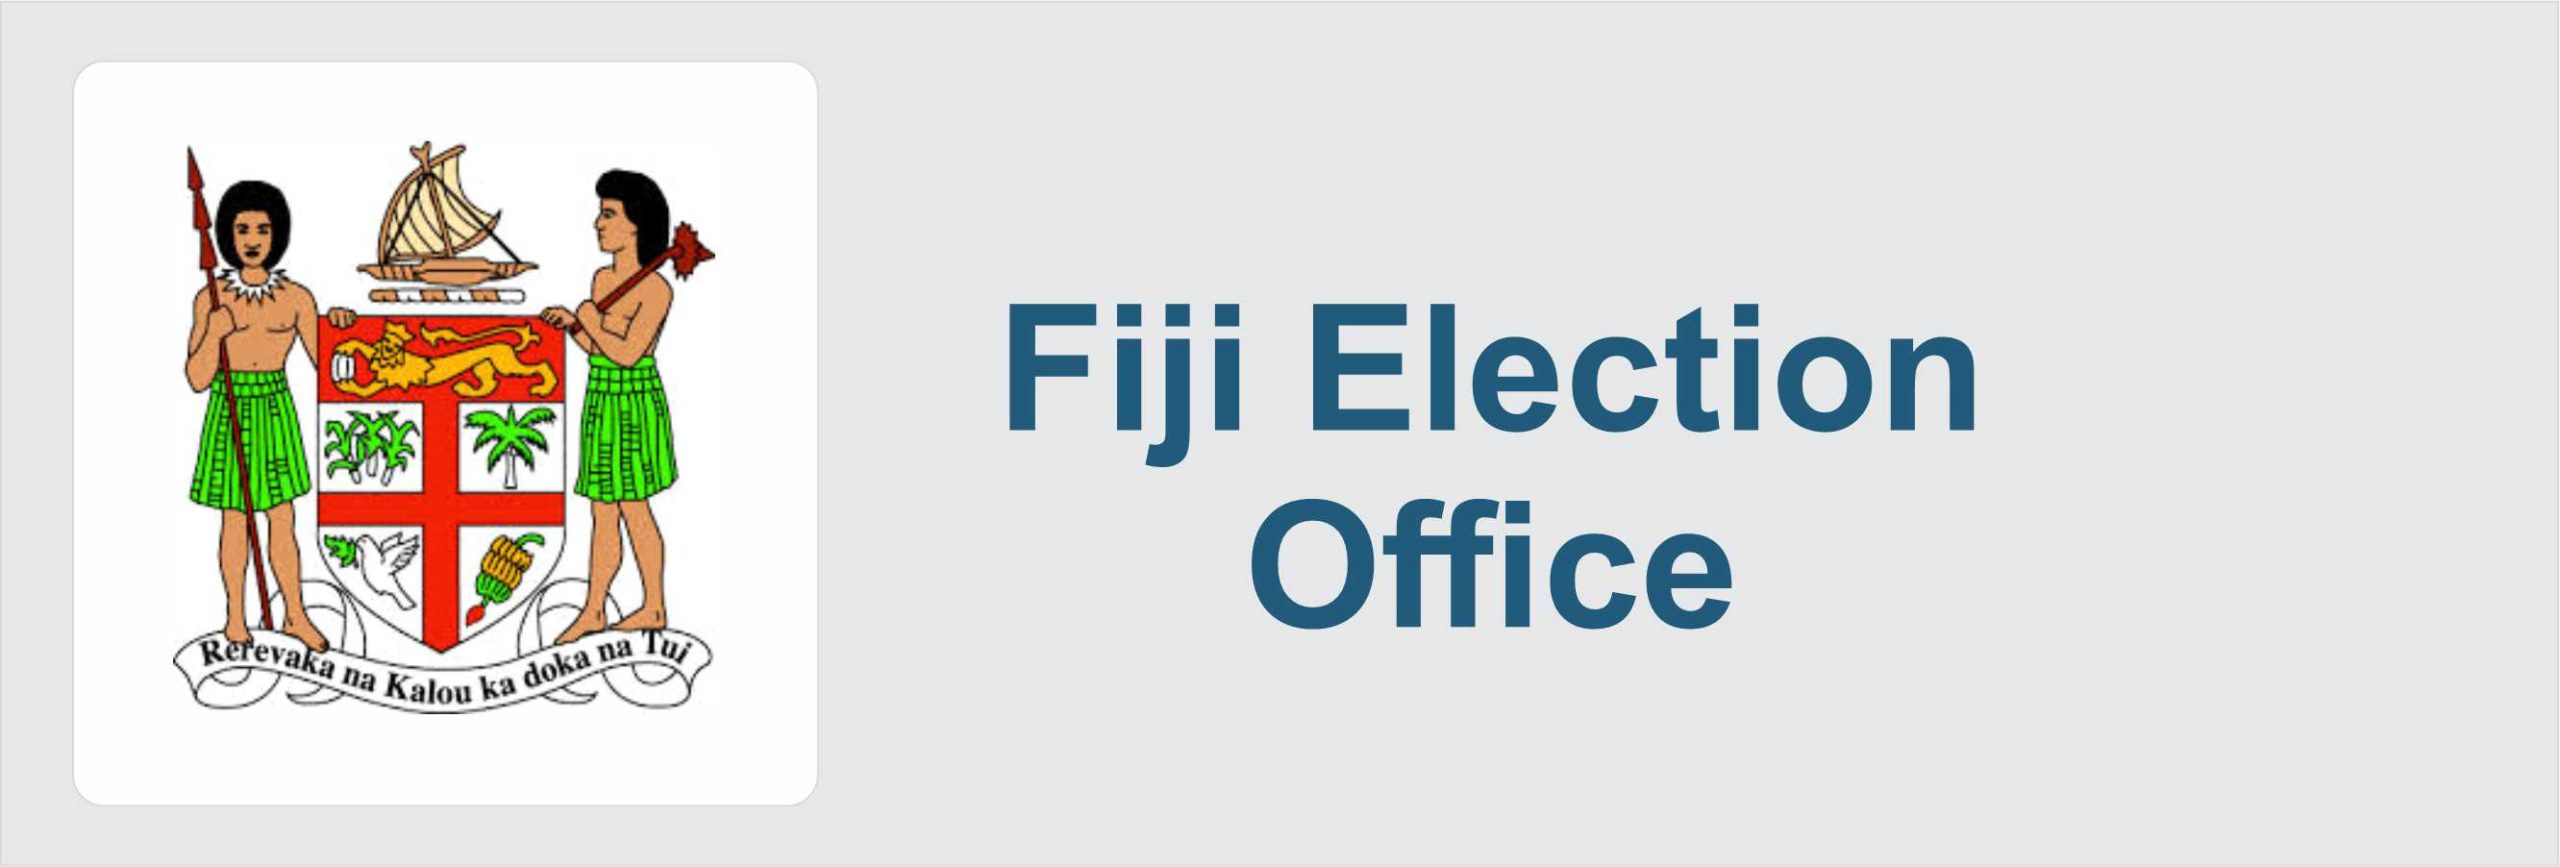 Government of Fiji